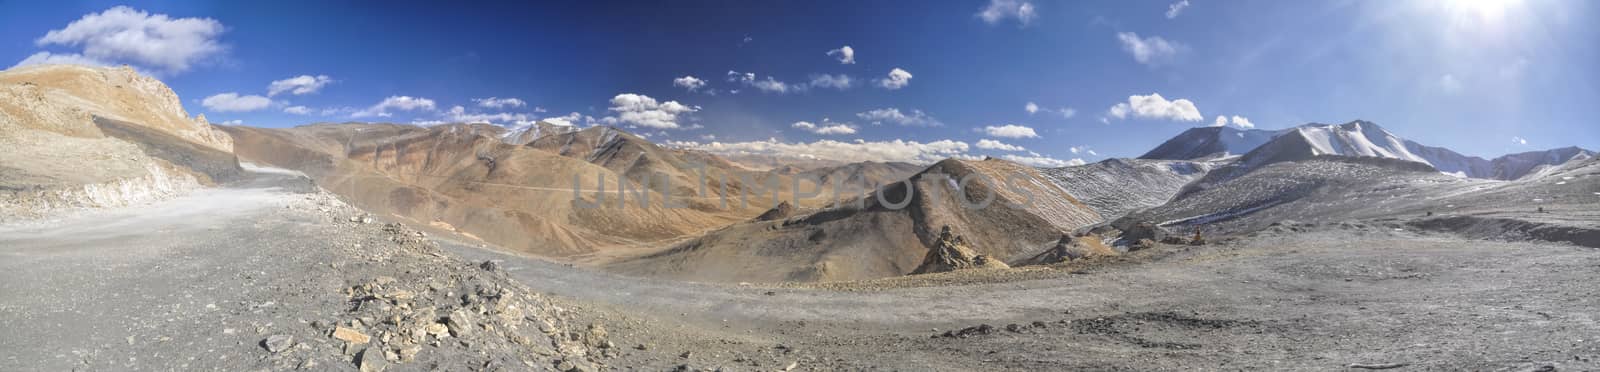 Road to Ladakh by MichalKnitl